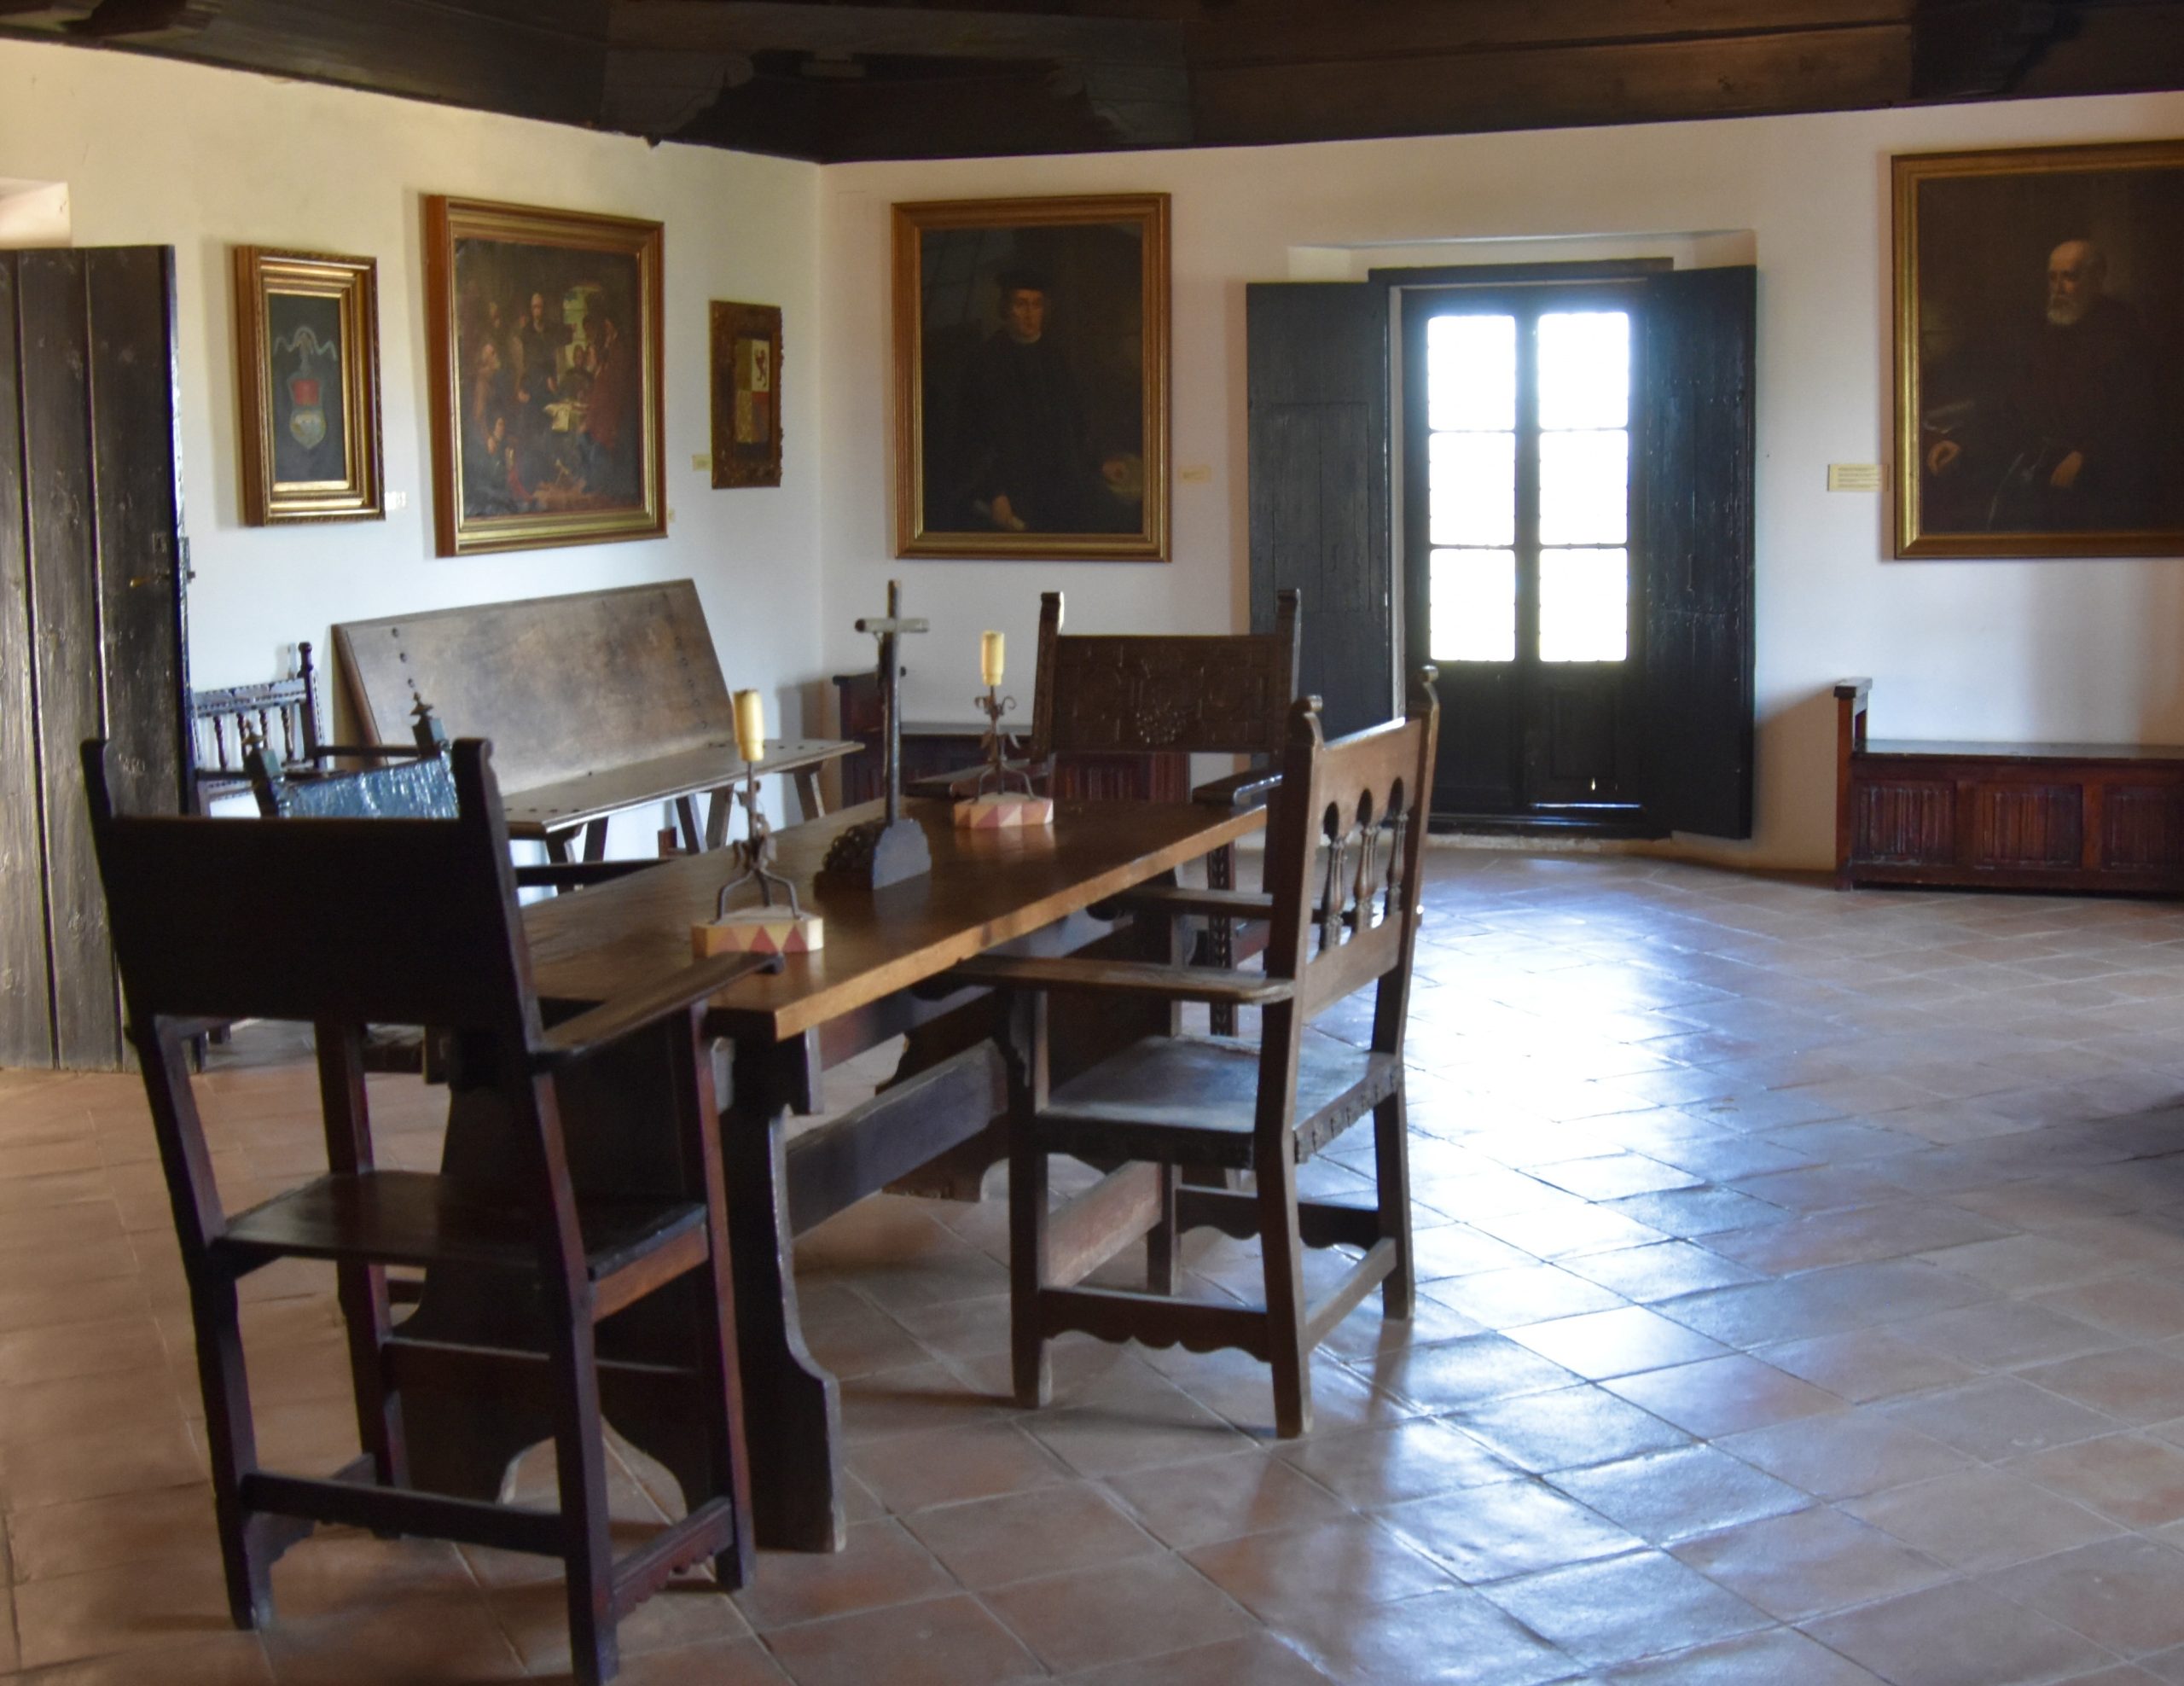 Room in La Rabida Where Columbus Met With the Townsfolk